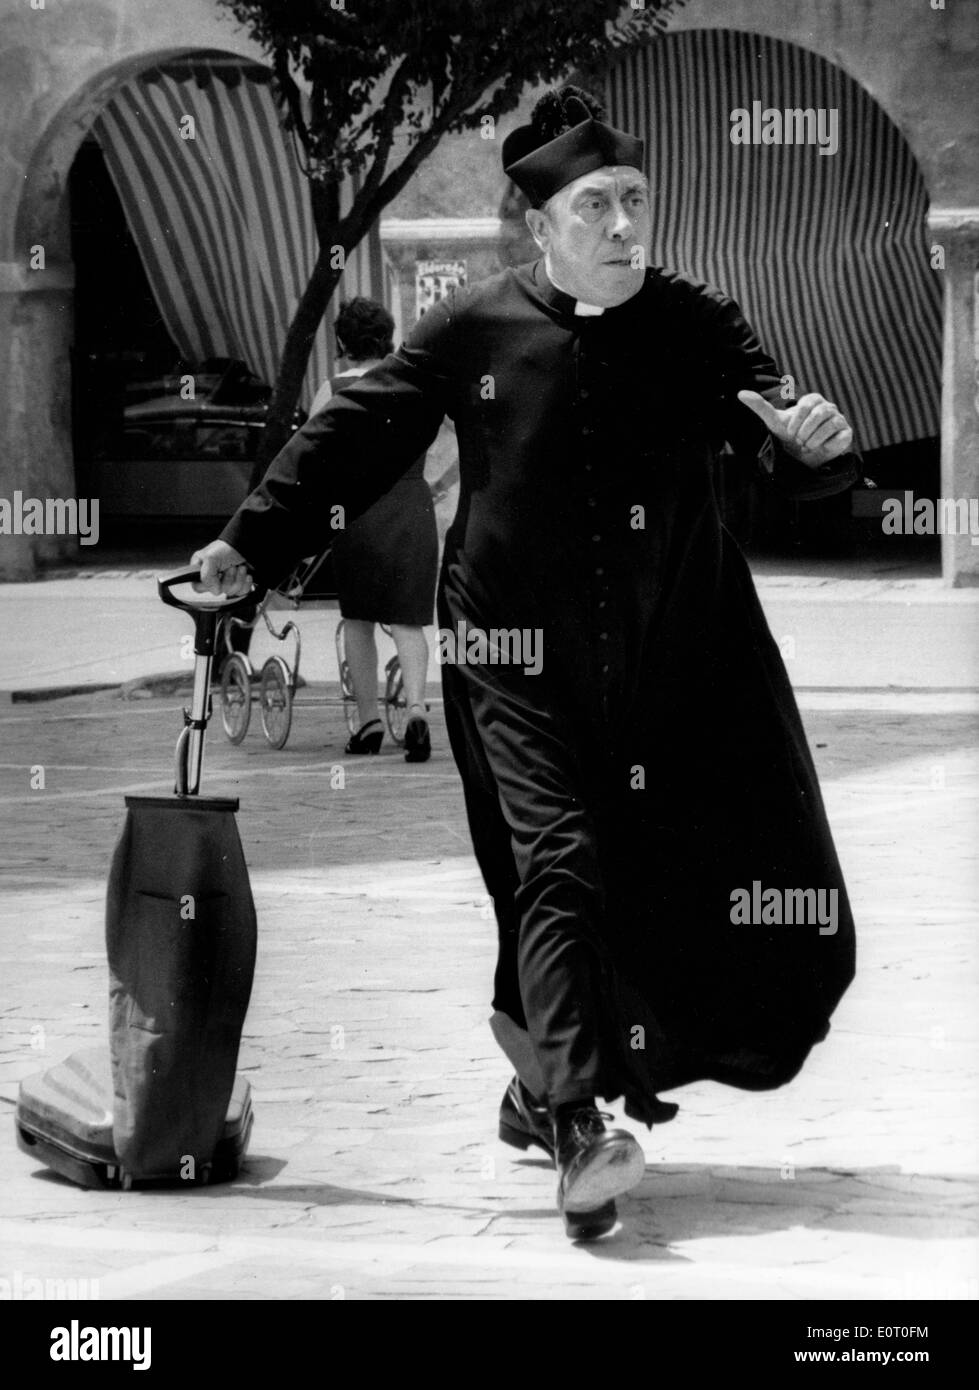 Actor Fernandel in film as 'Don Camillo' Stock Photo